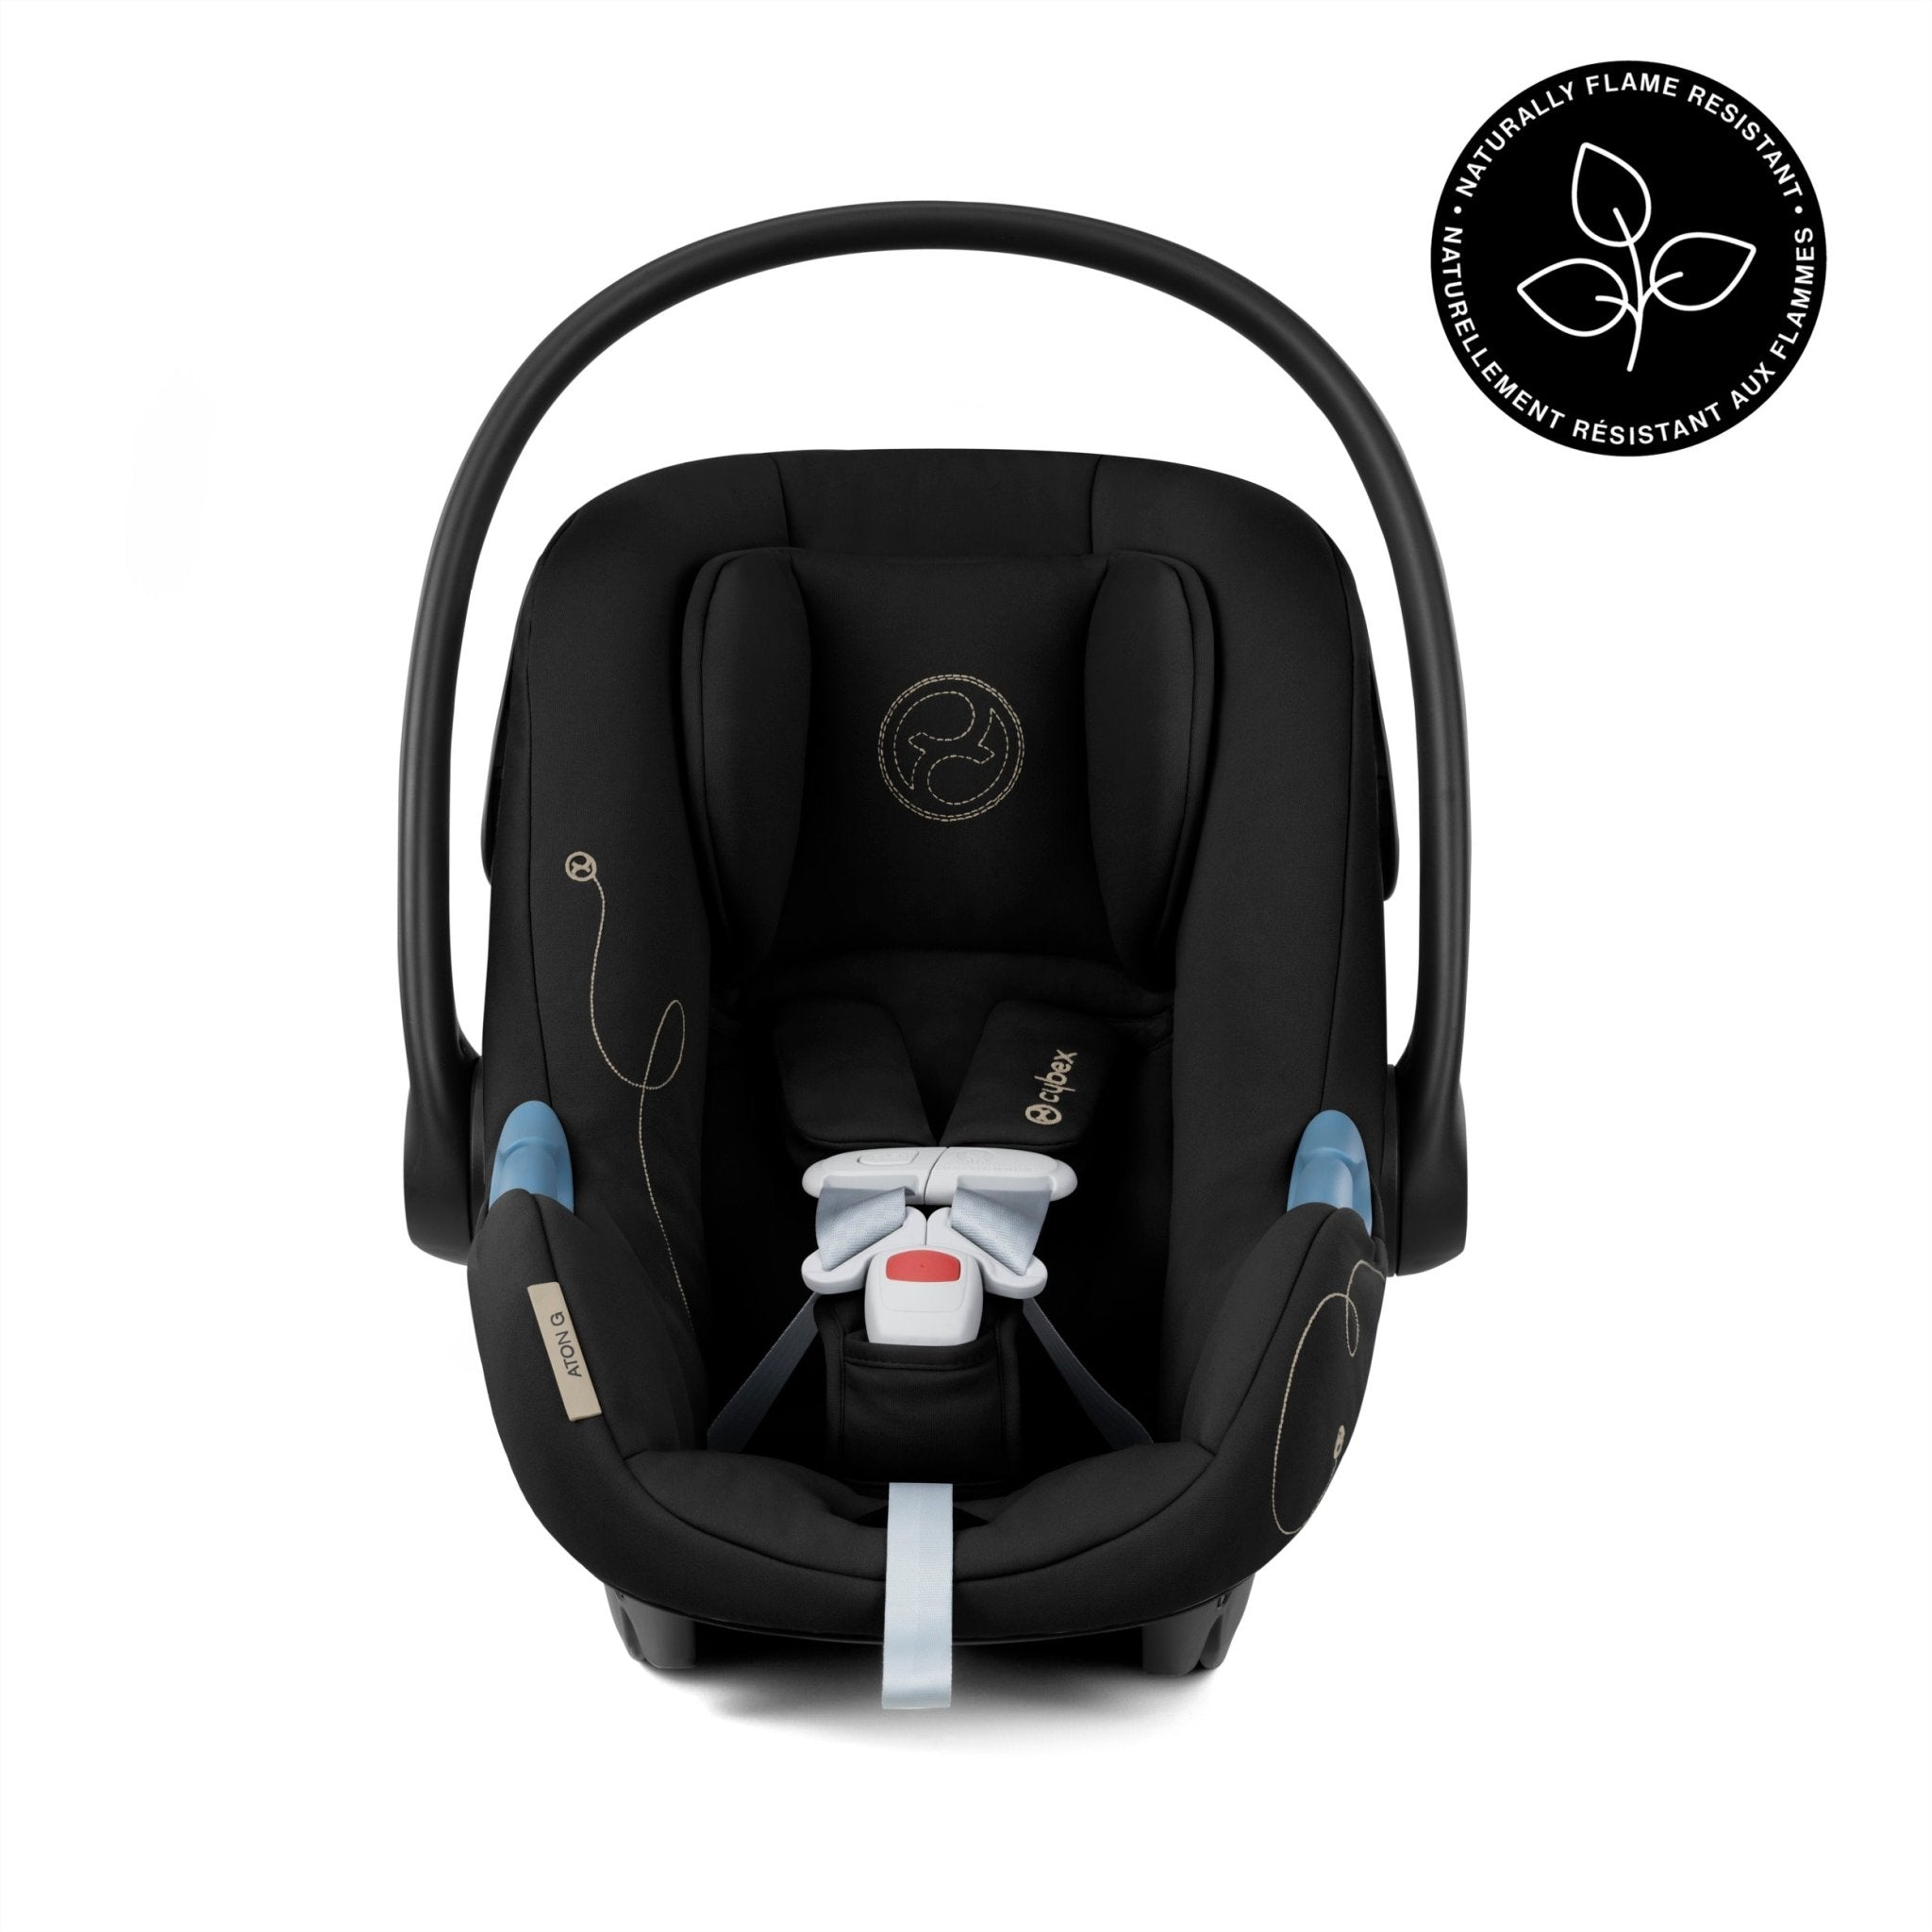 Cybex Aton G Swivel Infant Car Seat - ANB Baby -4063846381319$300 - $500